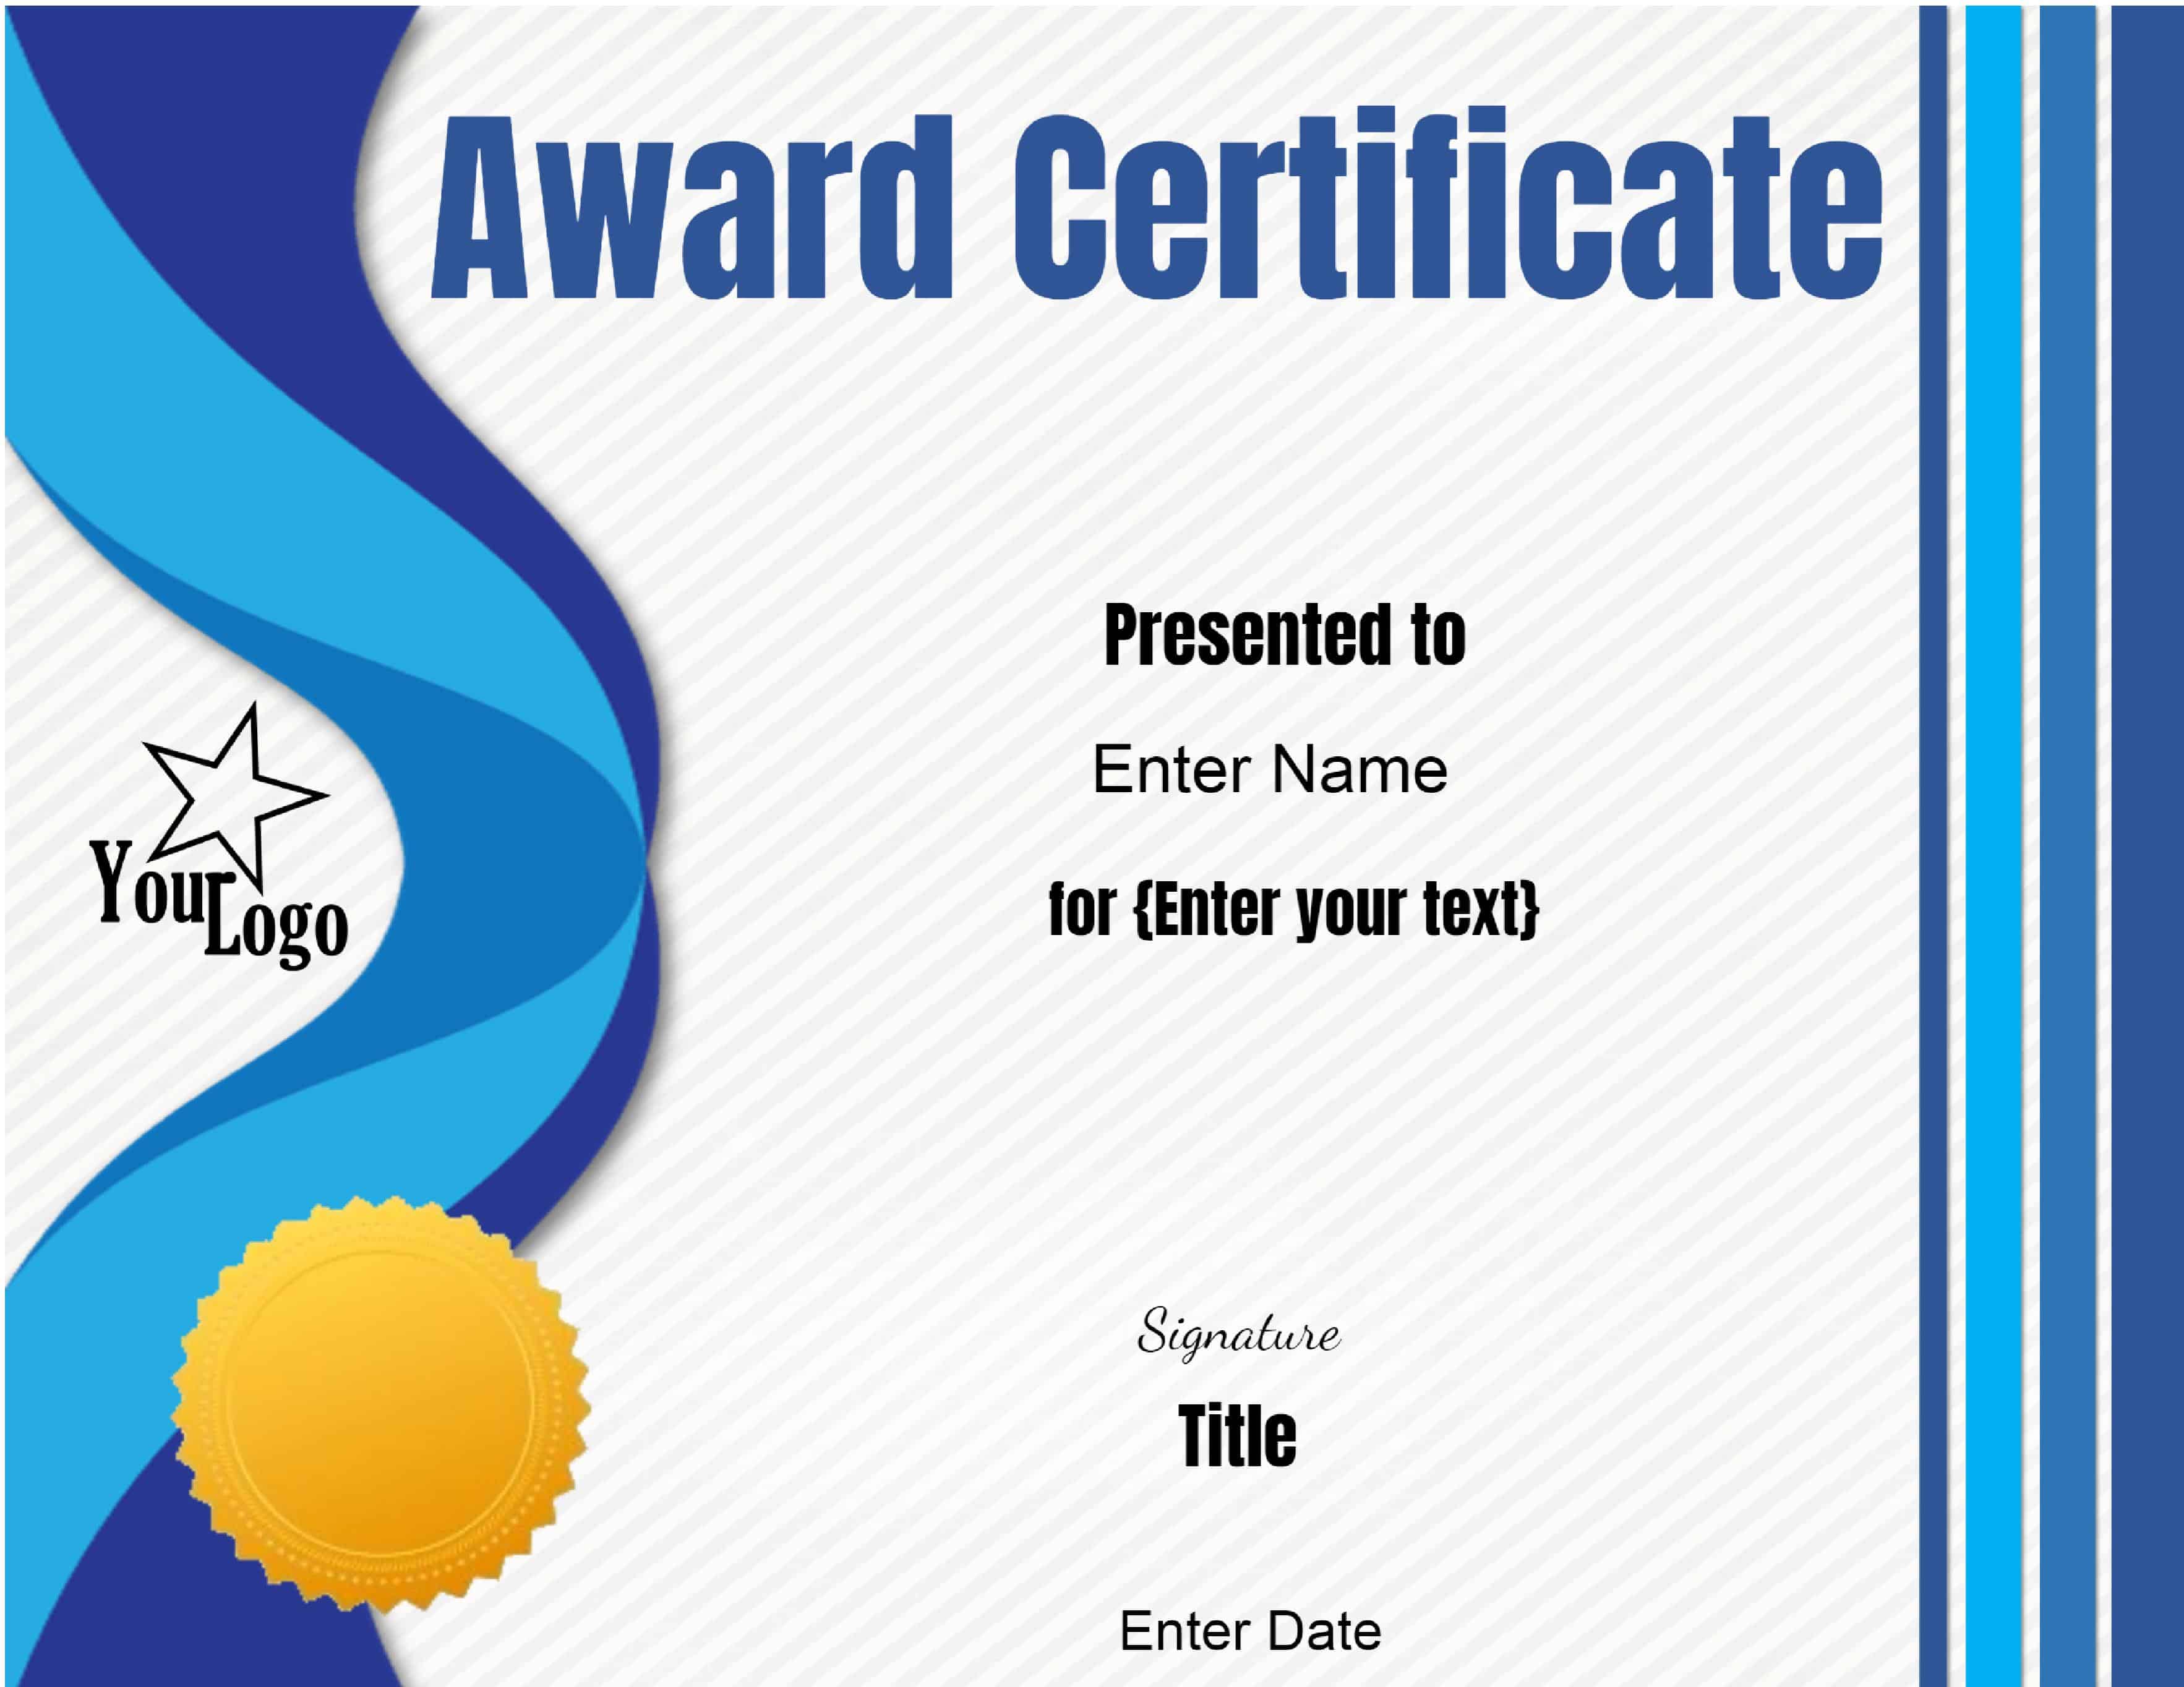 Award Certificate Template Free Download Editable